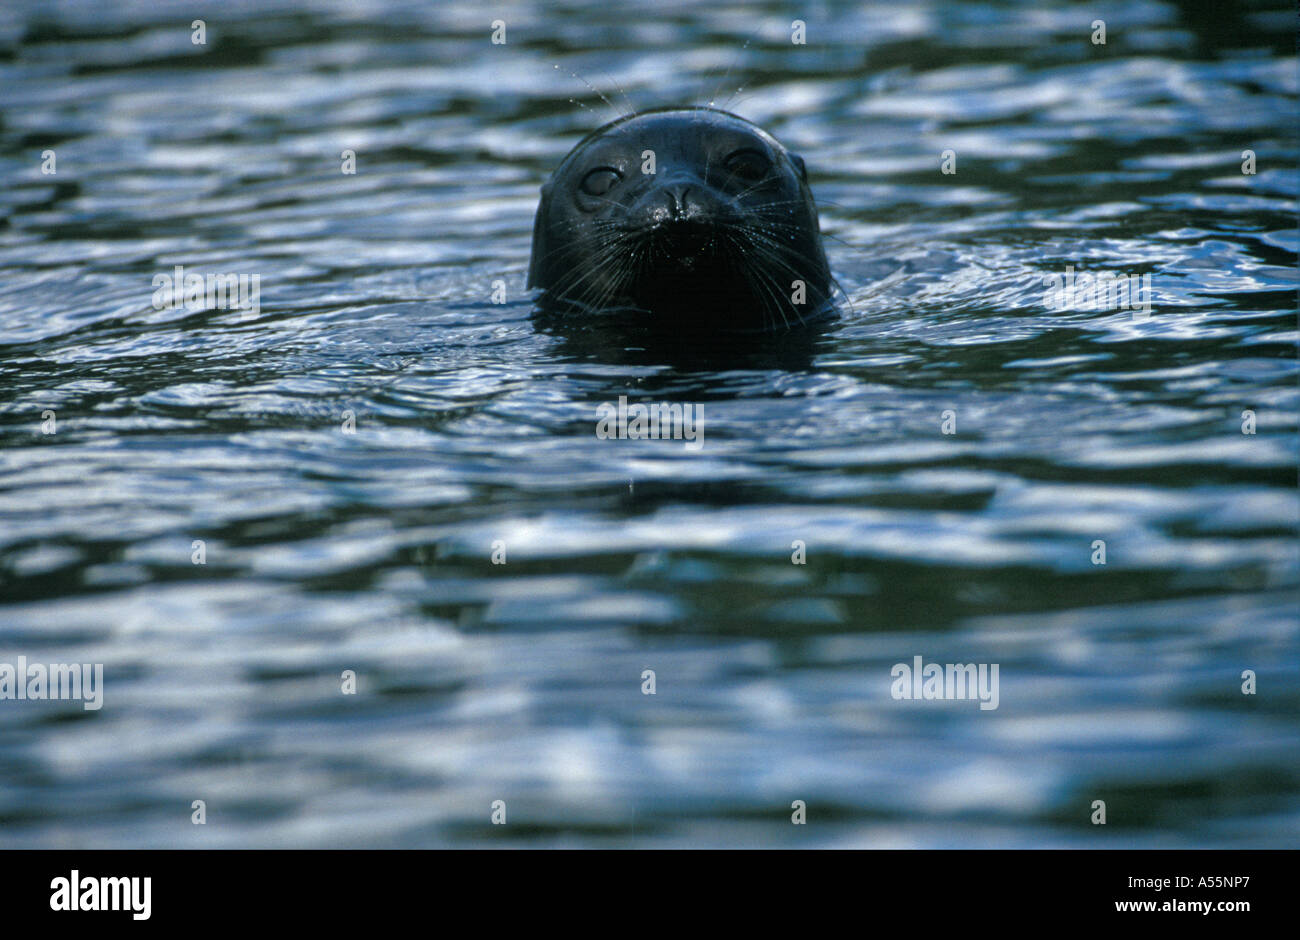 Seals grow bigger nostrils to survive in Arctic | Nation | iosconews.com